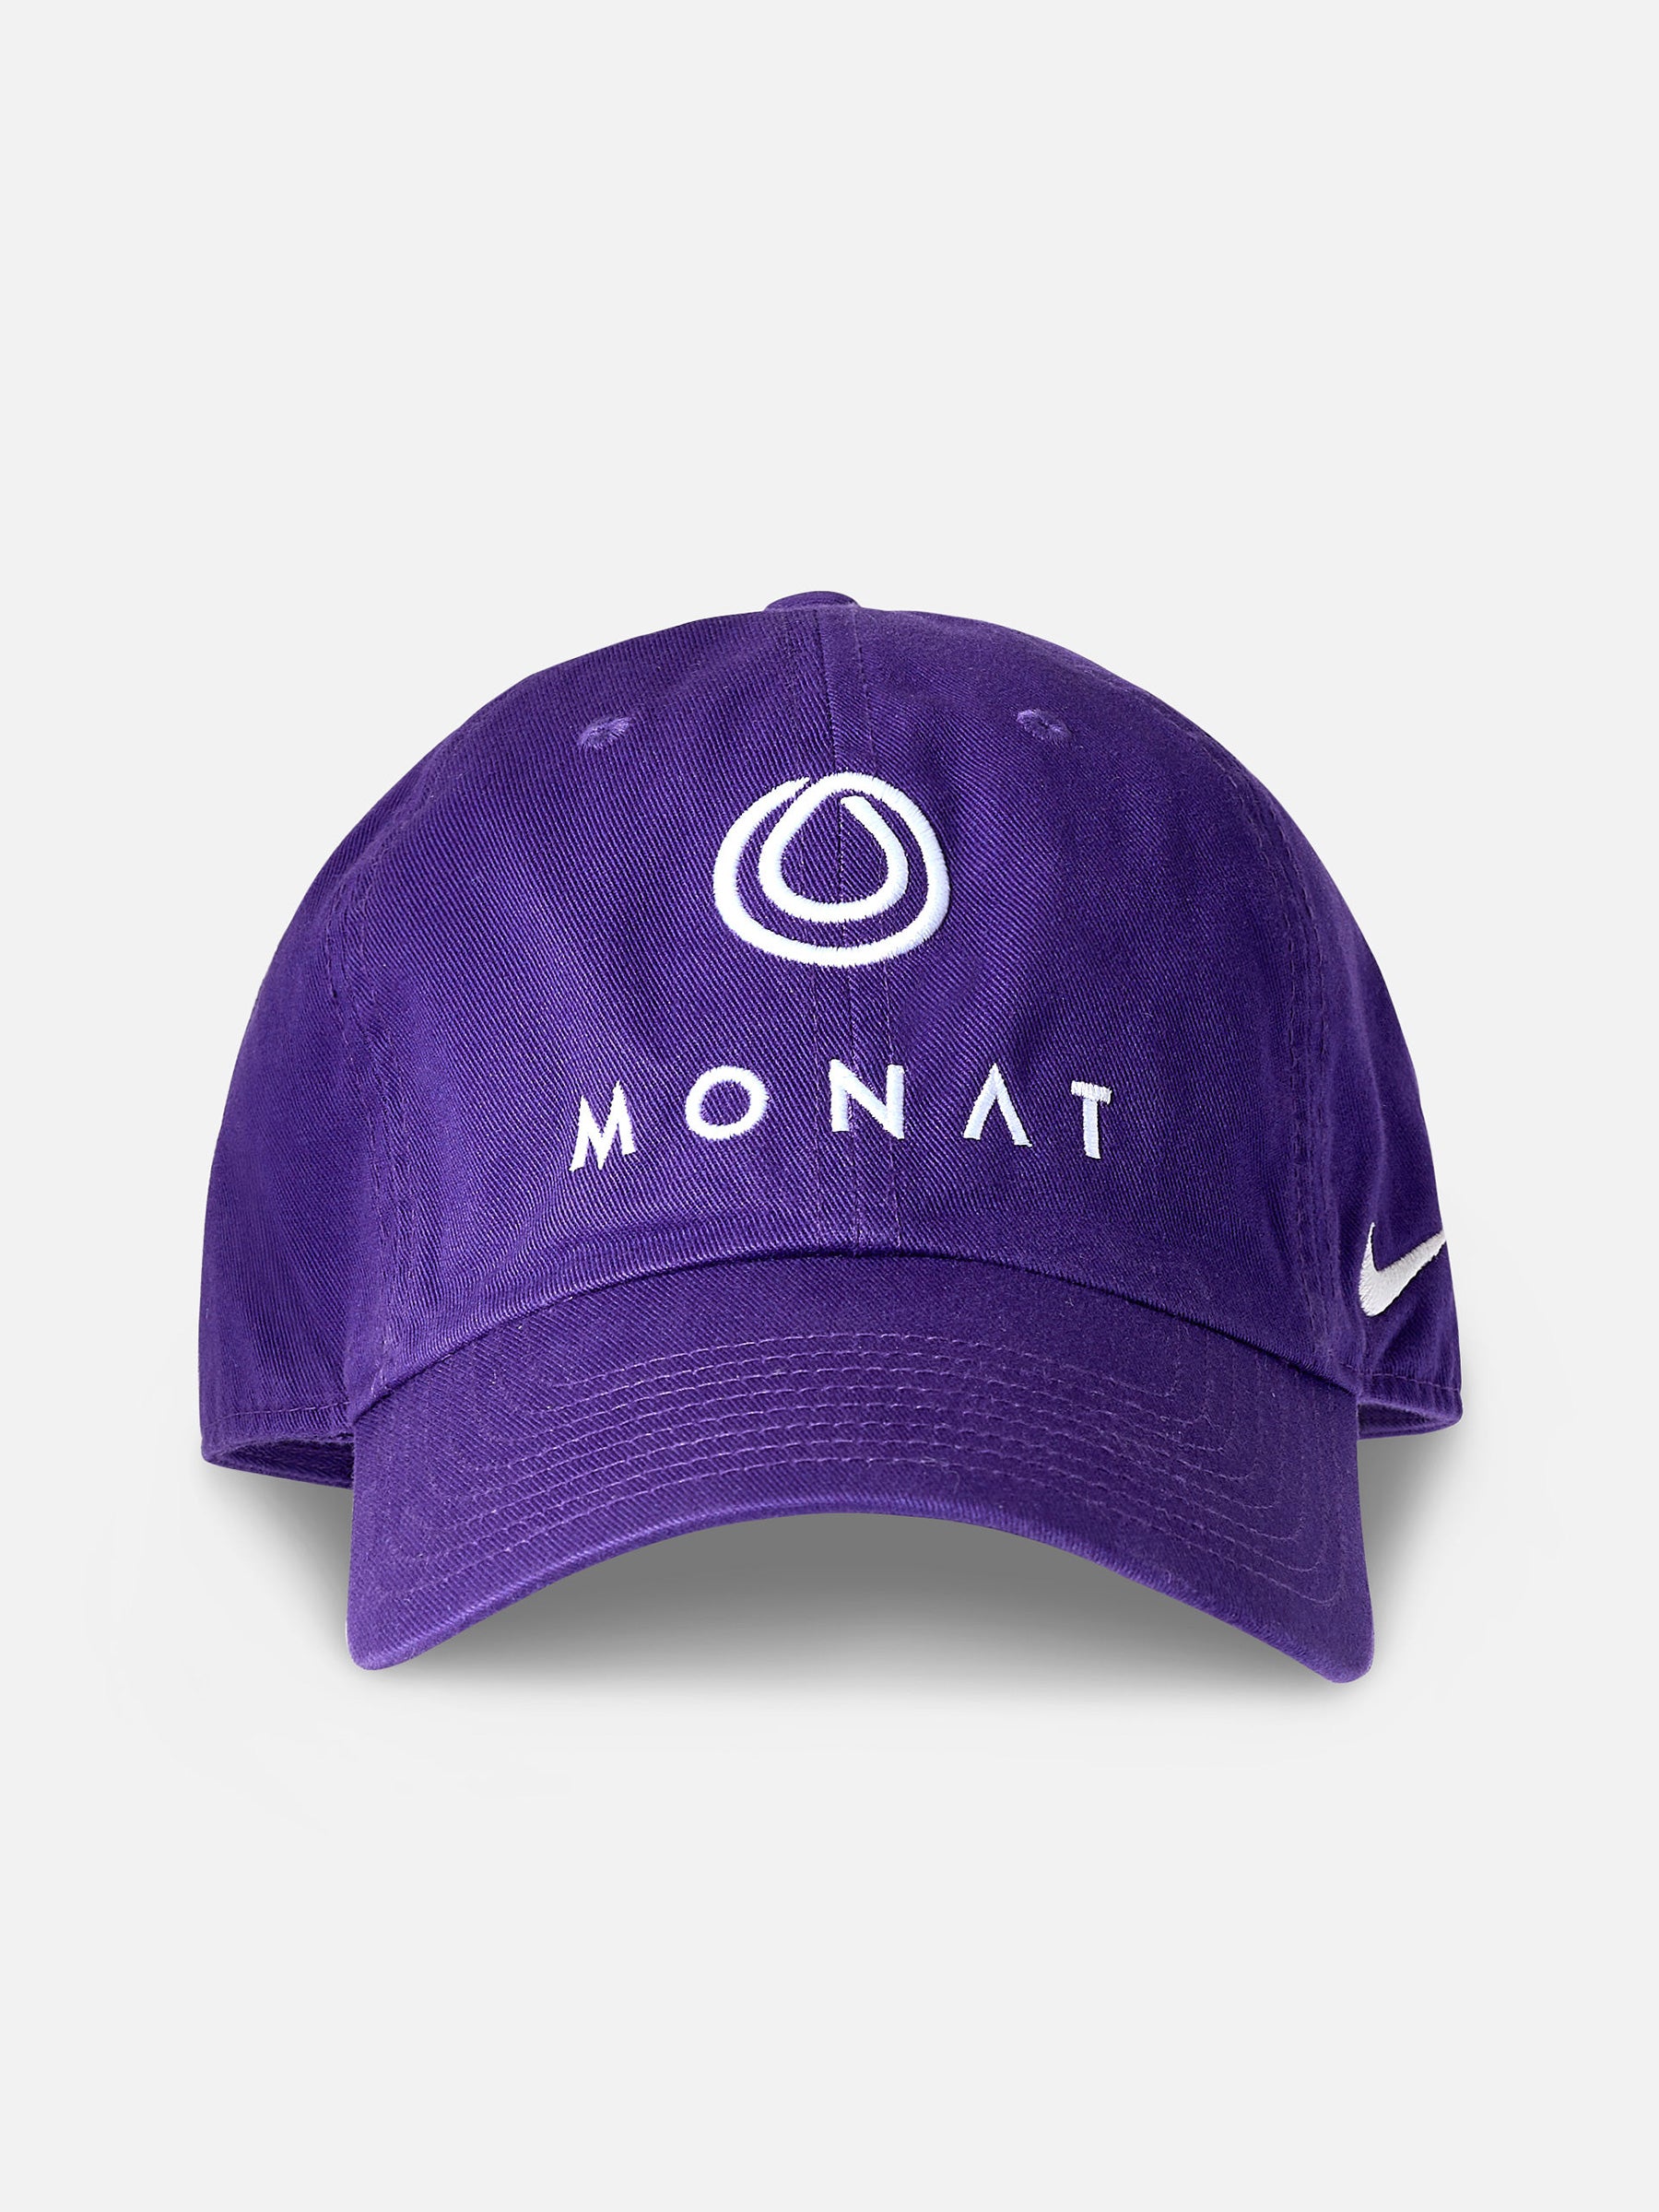 MONAT NIKE HAT - PURPLE